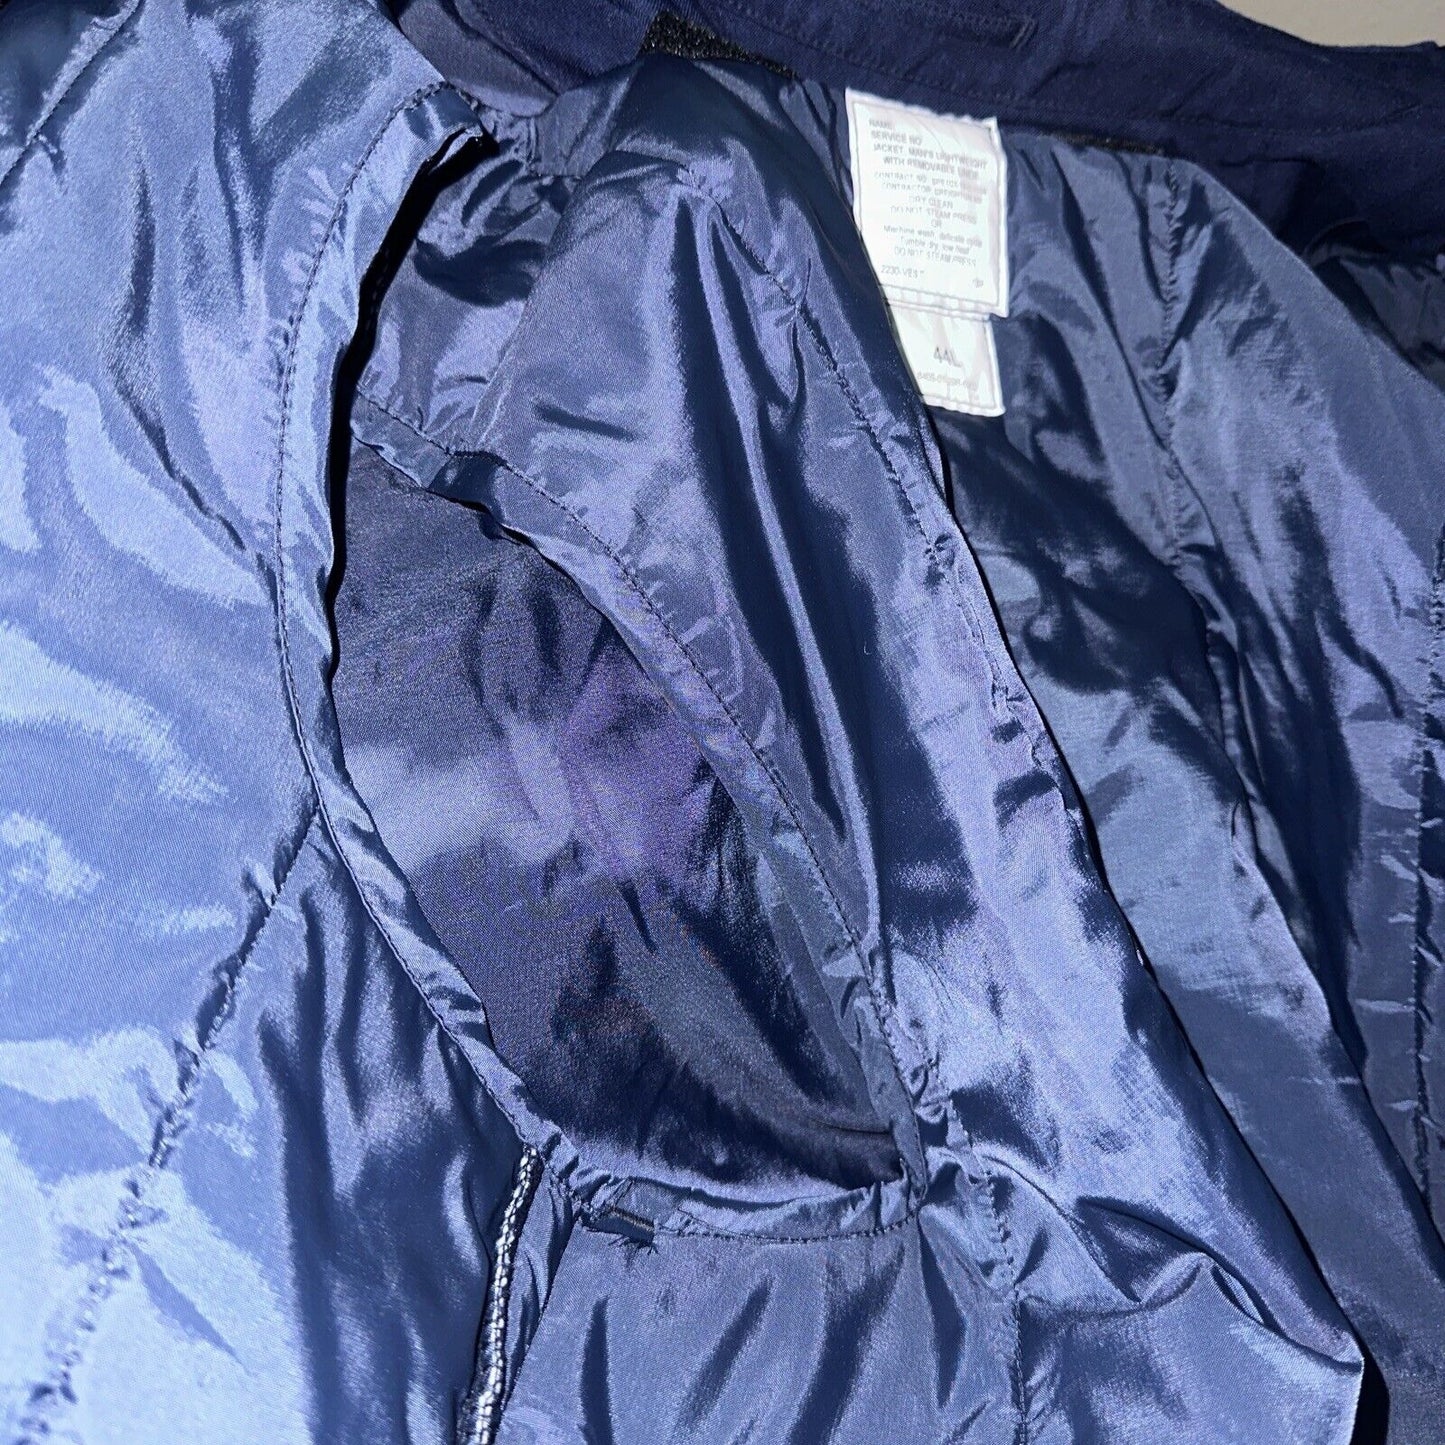 Men’s Blue 44L USAF Air Force Uniform Service Blues Jacket With Lining